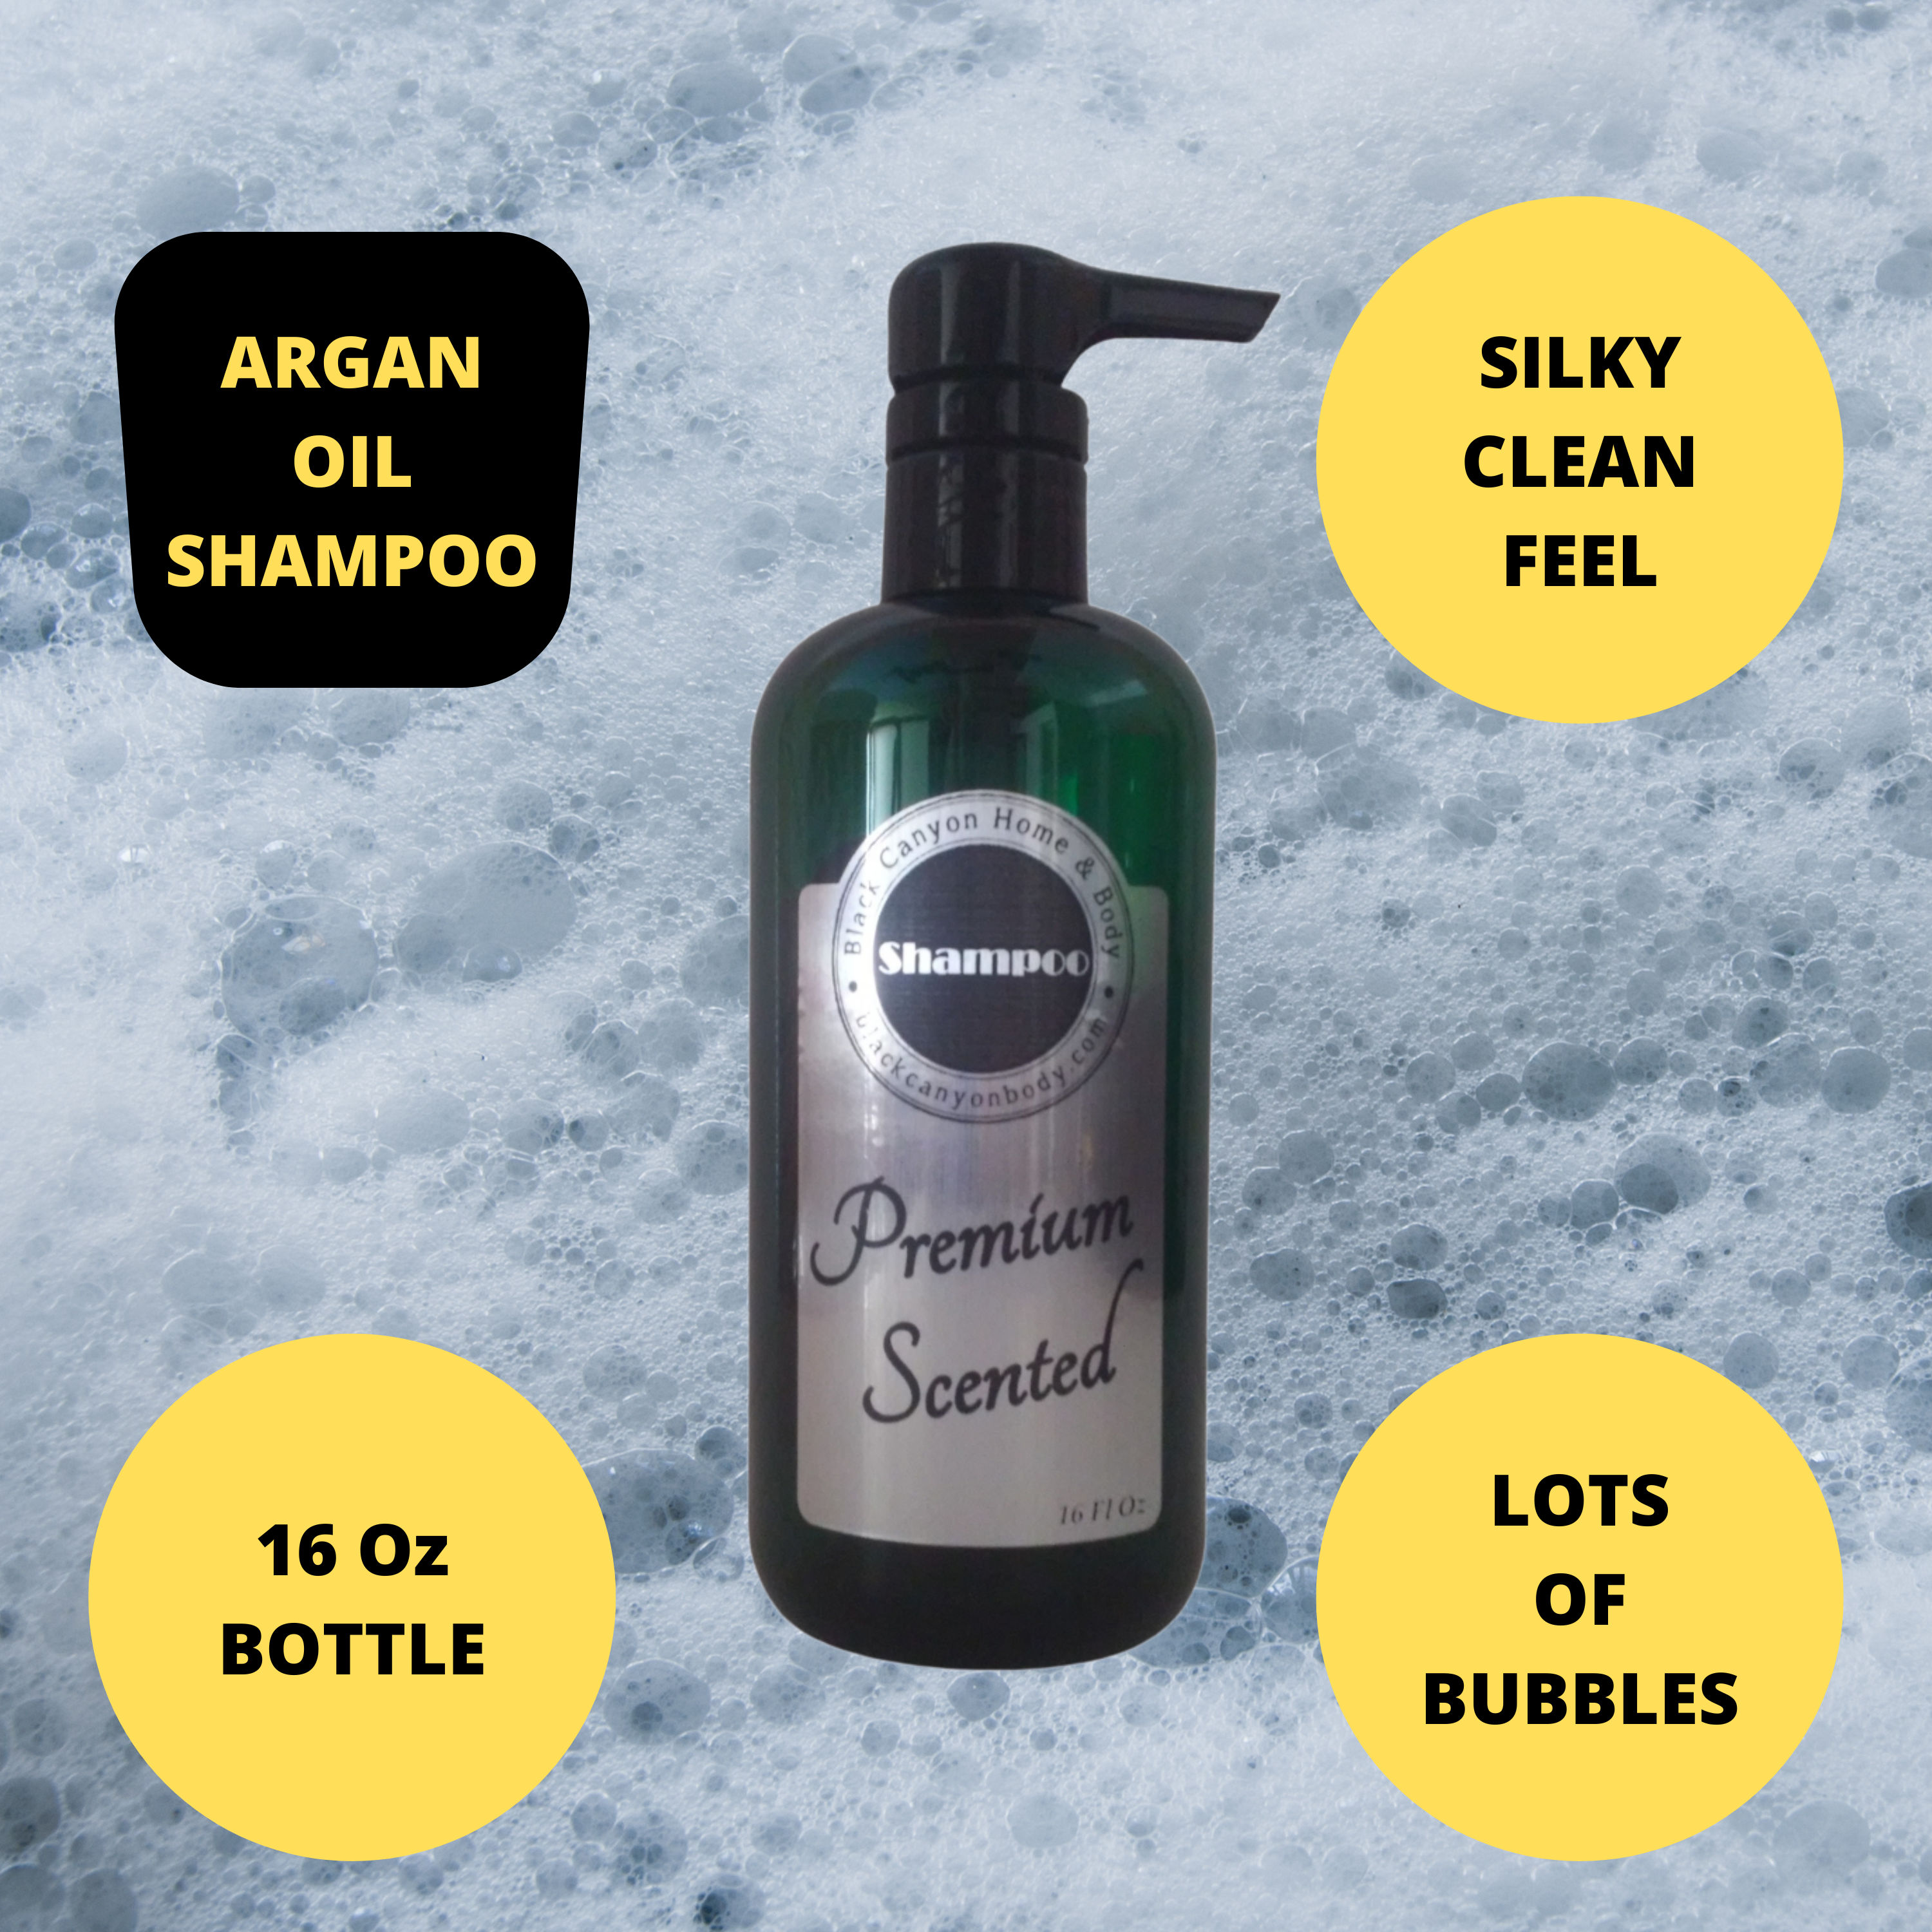 Black Canyon Florida Grapefruit Scented Shampoo with Argan Oil